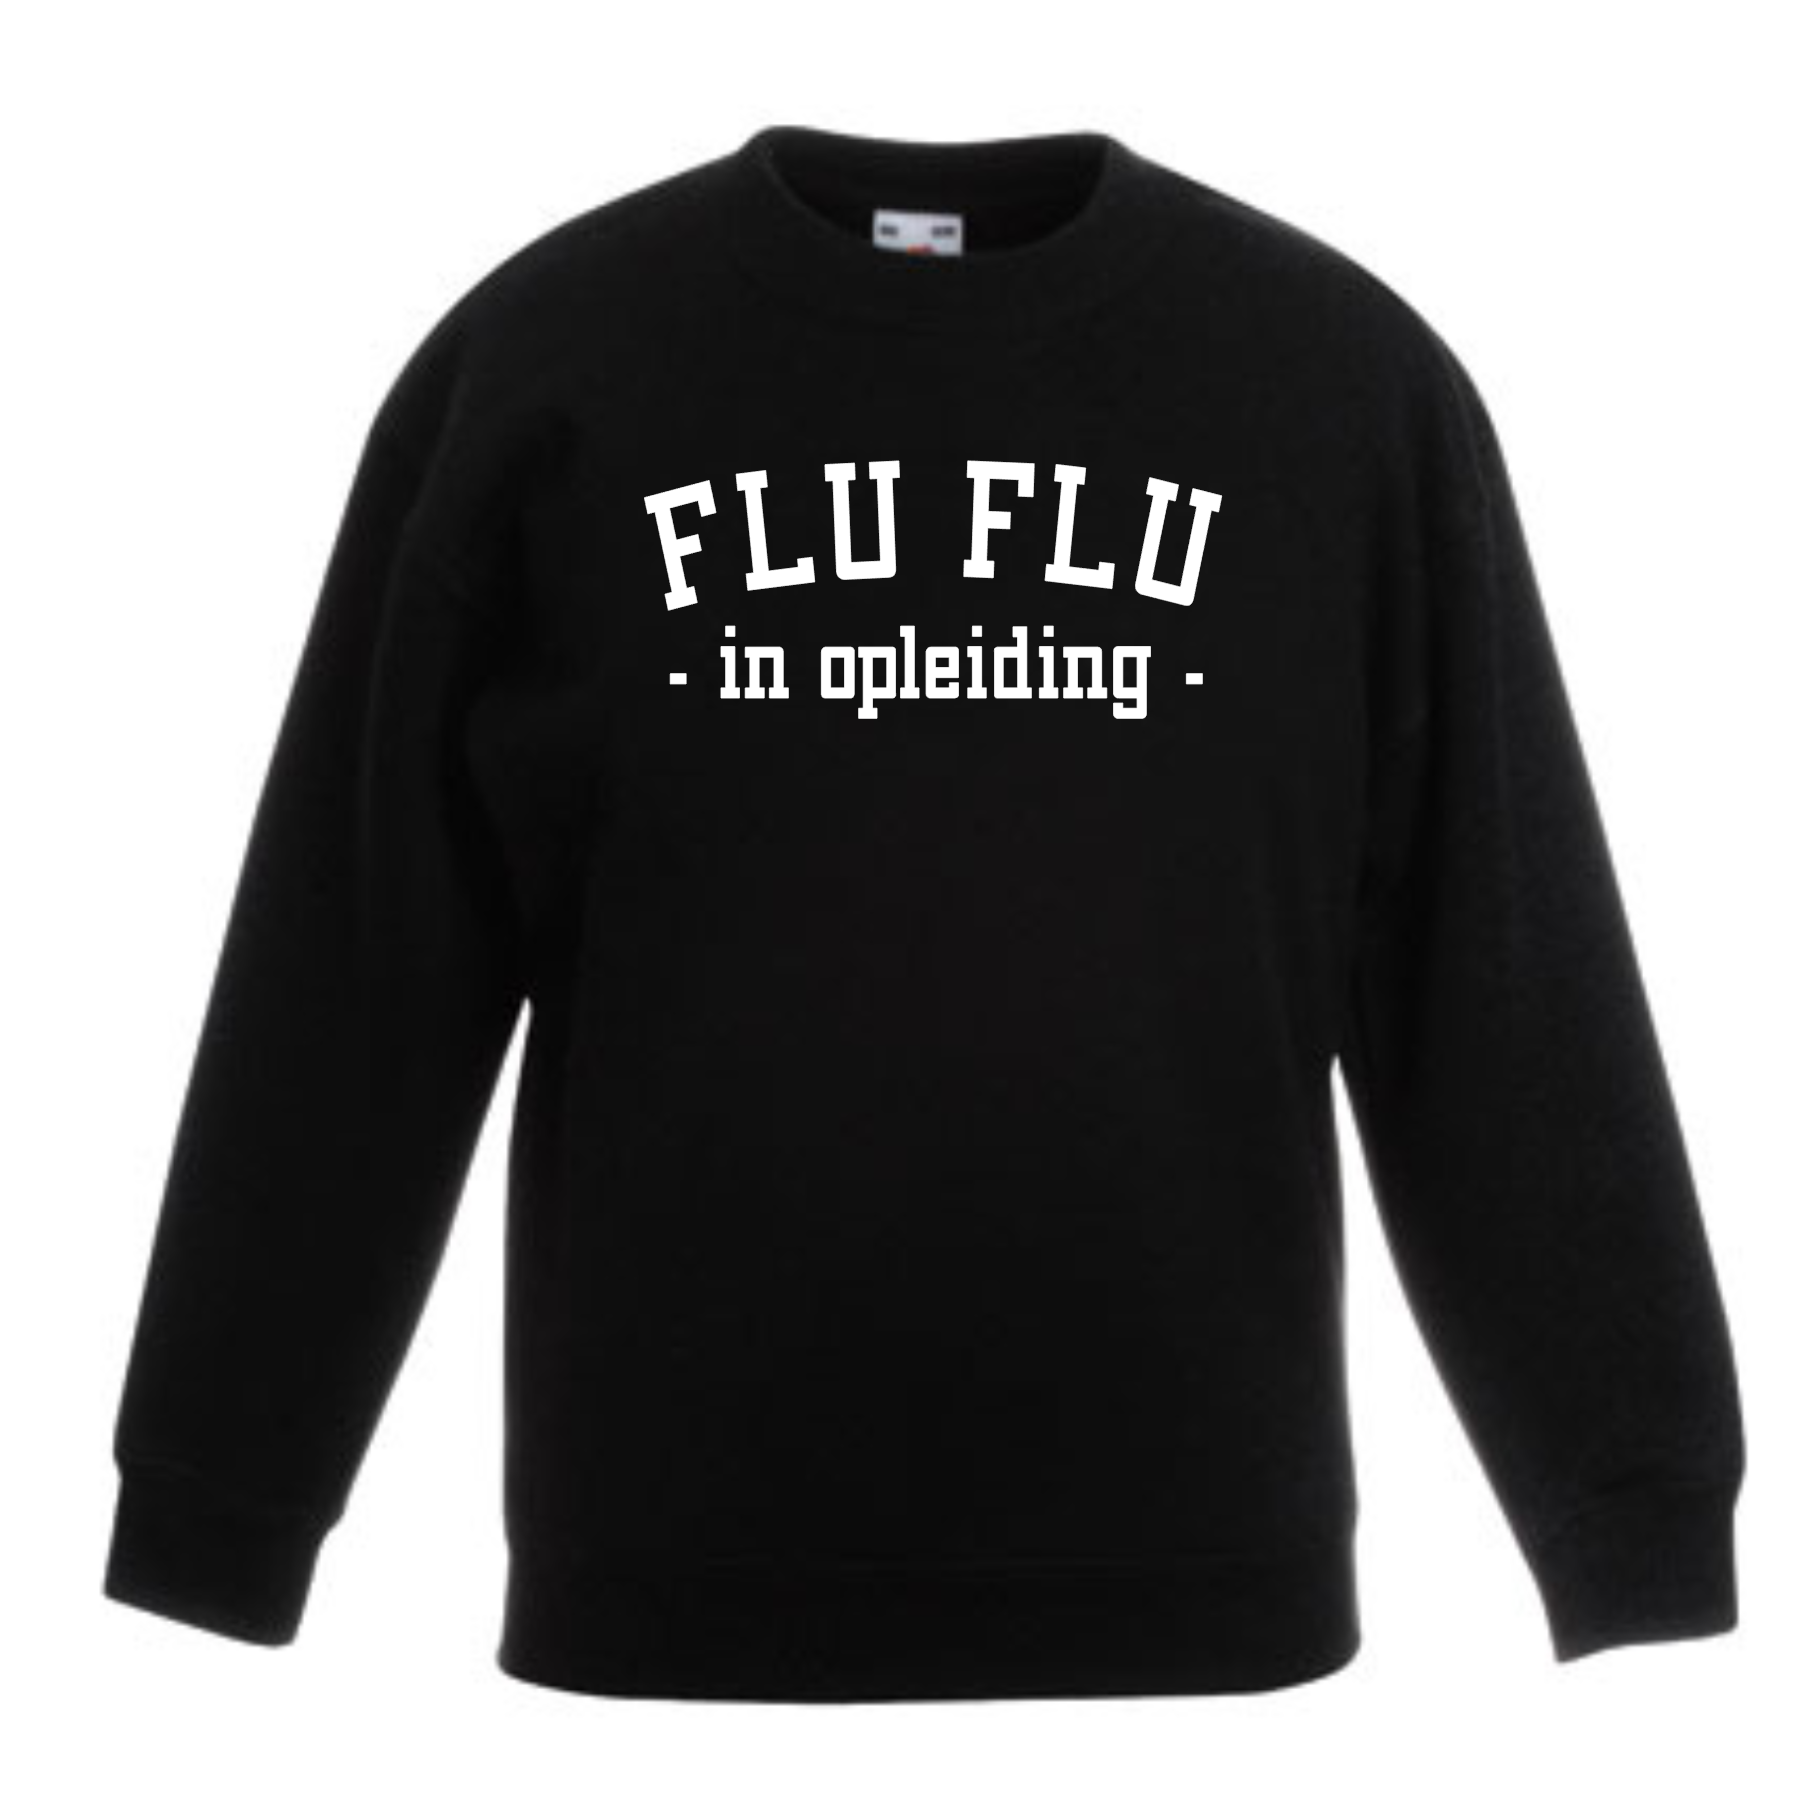 Kids sweater – Fluflu in opleiding